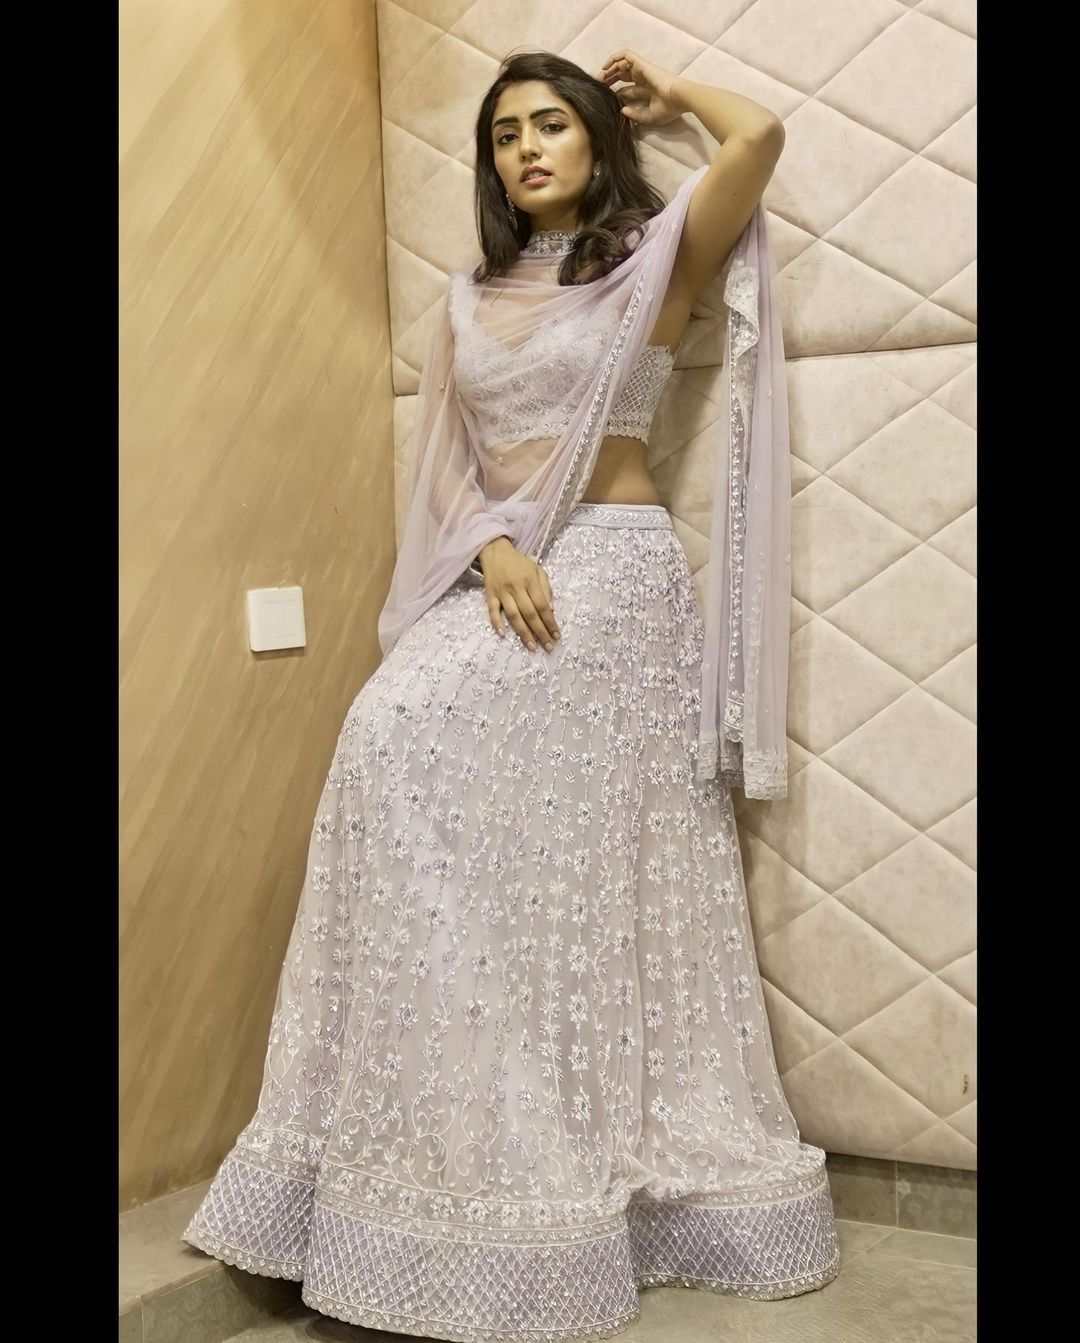 Eesha Rebba Photos in White Dress        Pc@Instagram